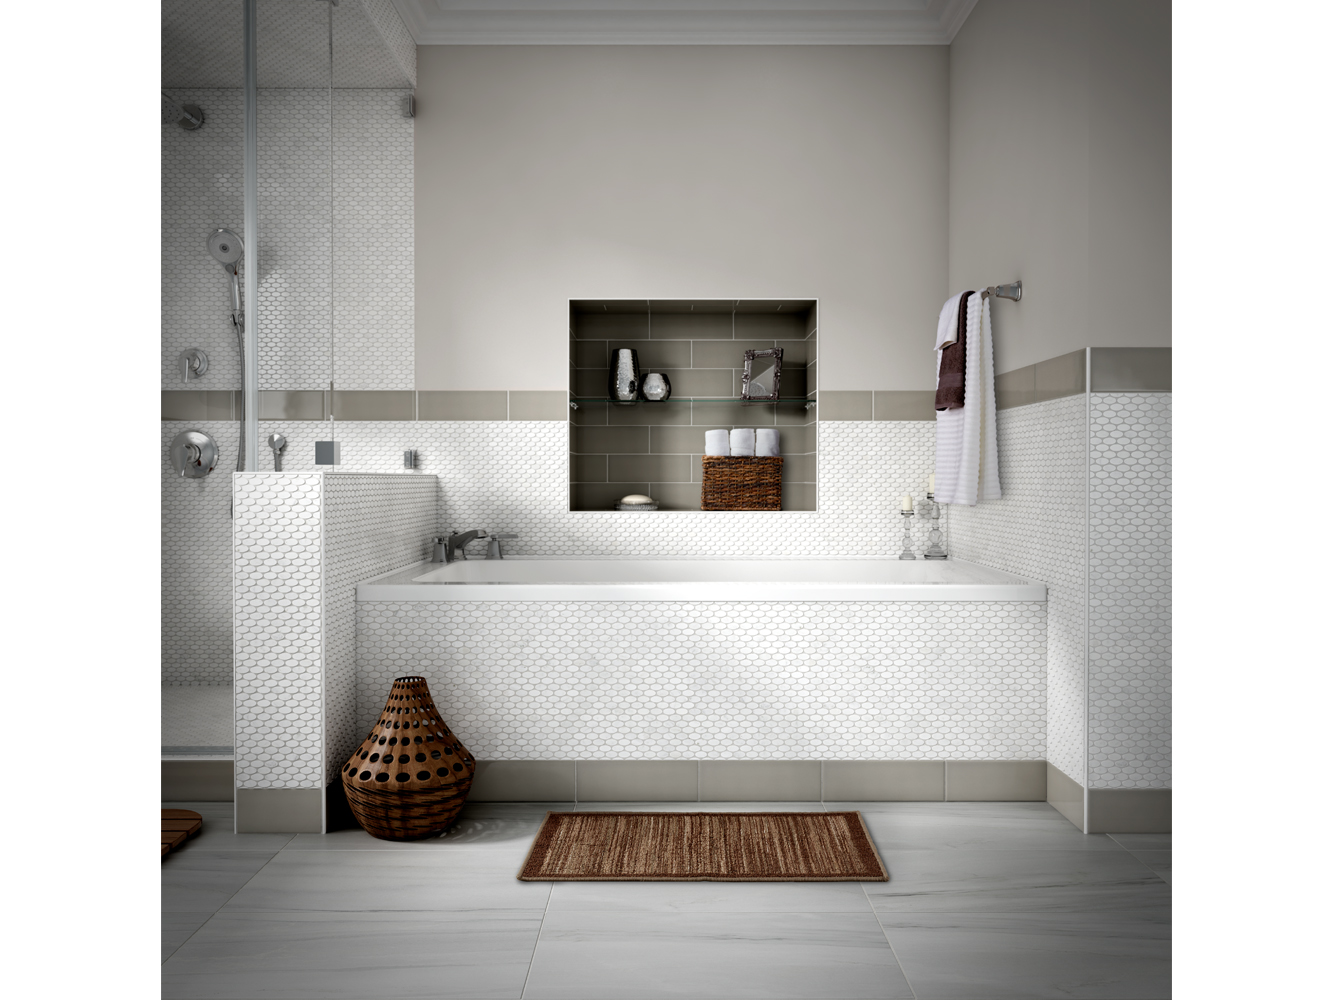 pix-us-cg-mosaic-tile-bathroom